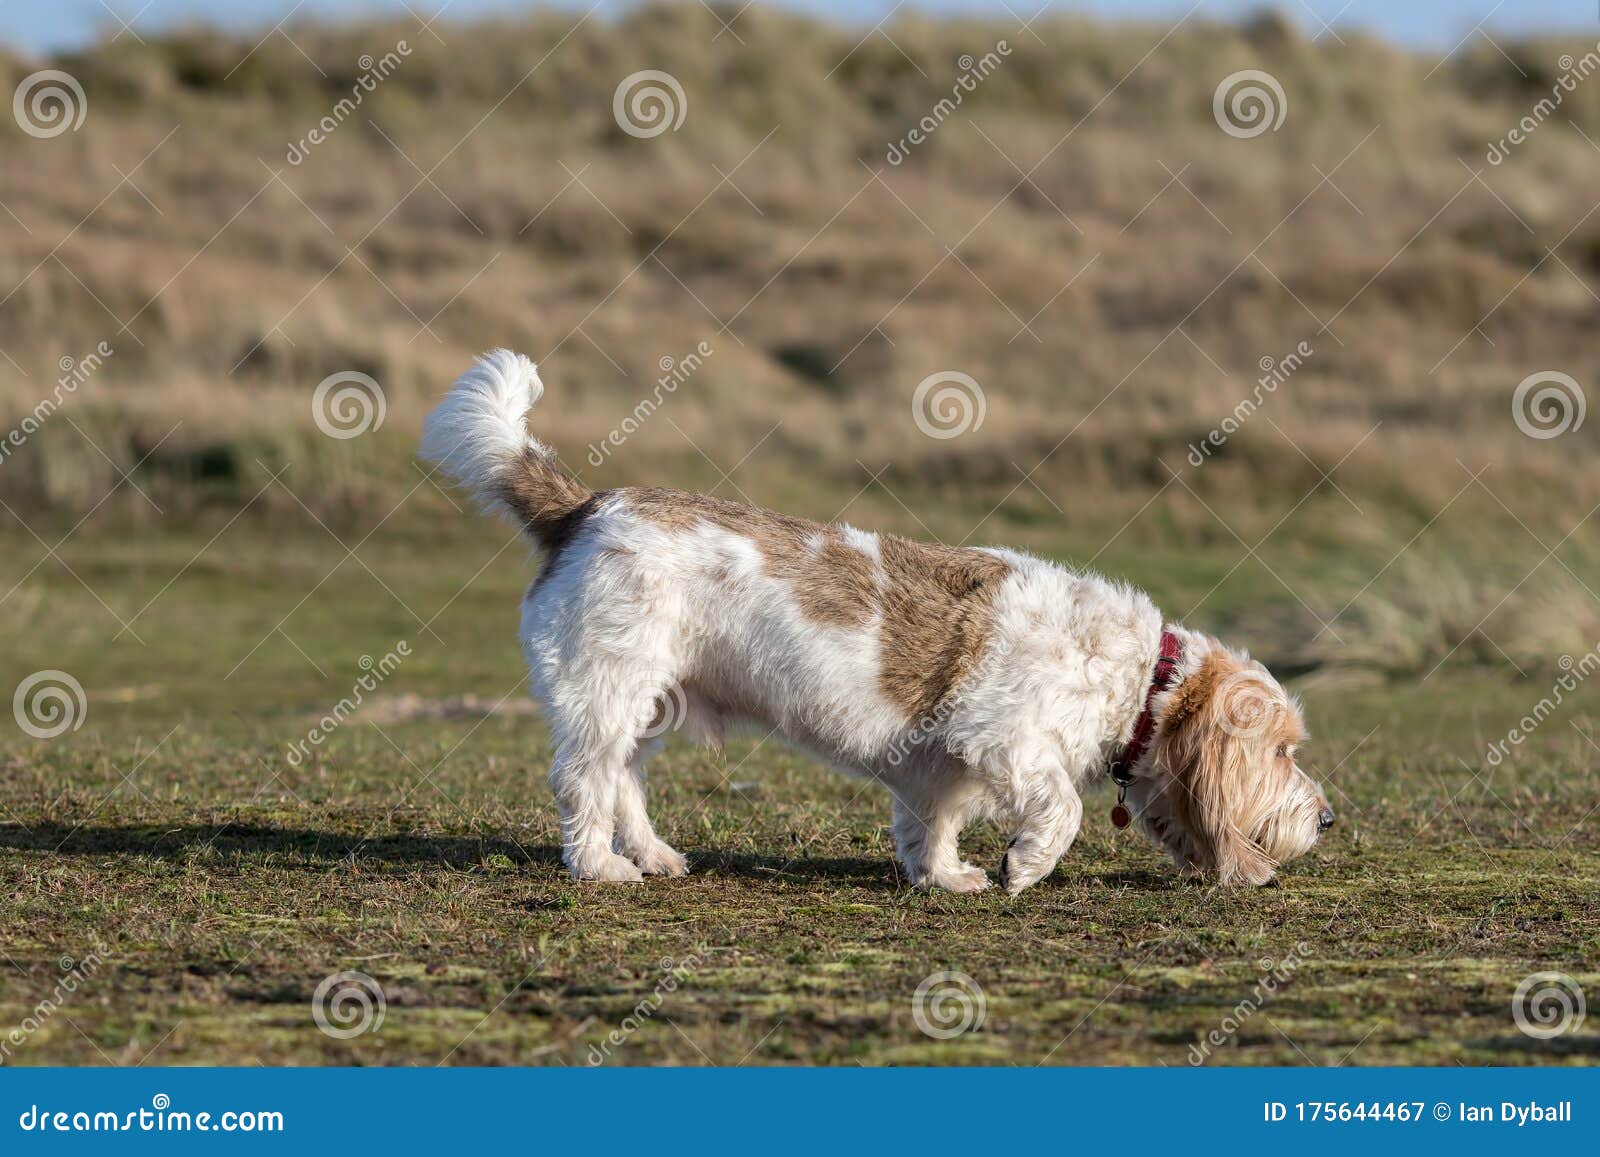 grand basset griffon vendeen hound dog picking up the scent